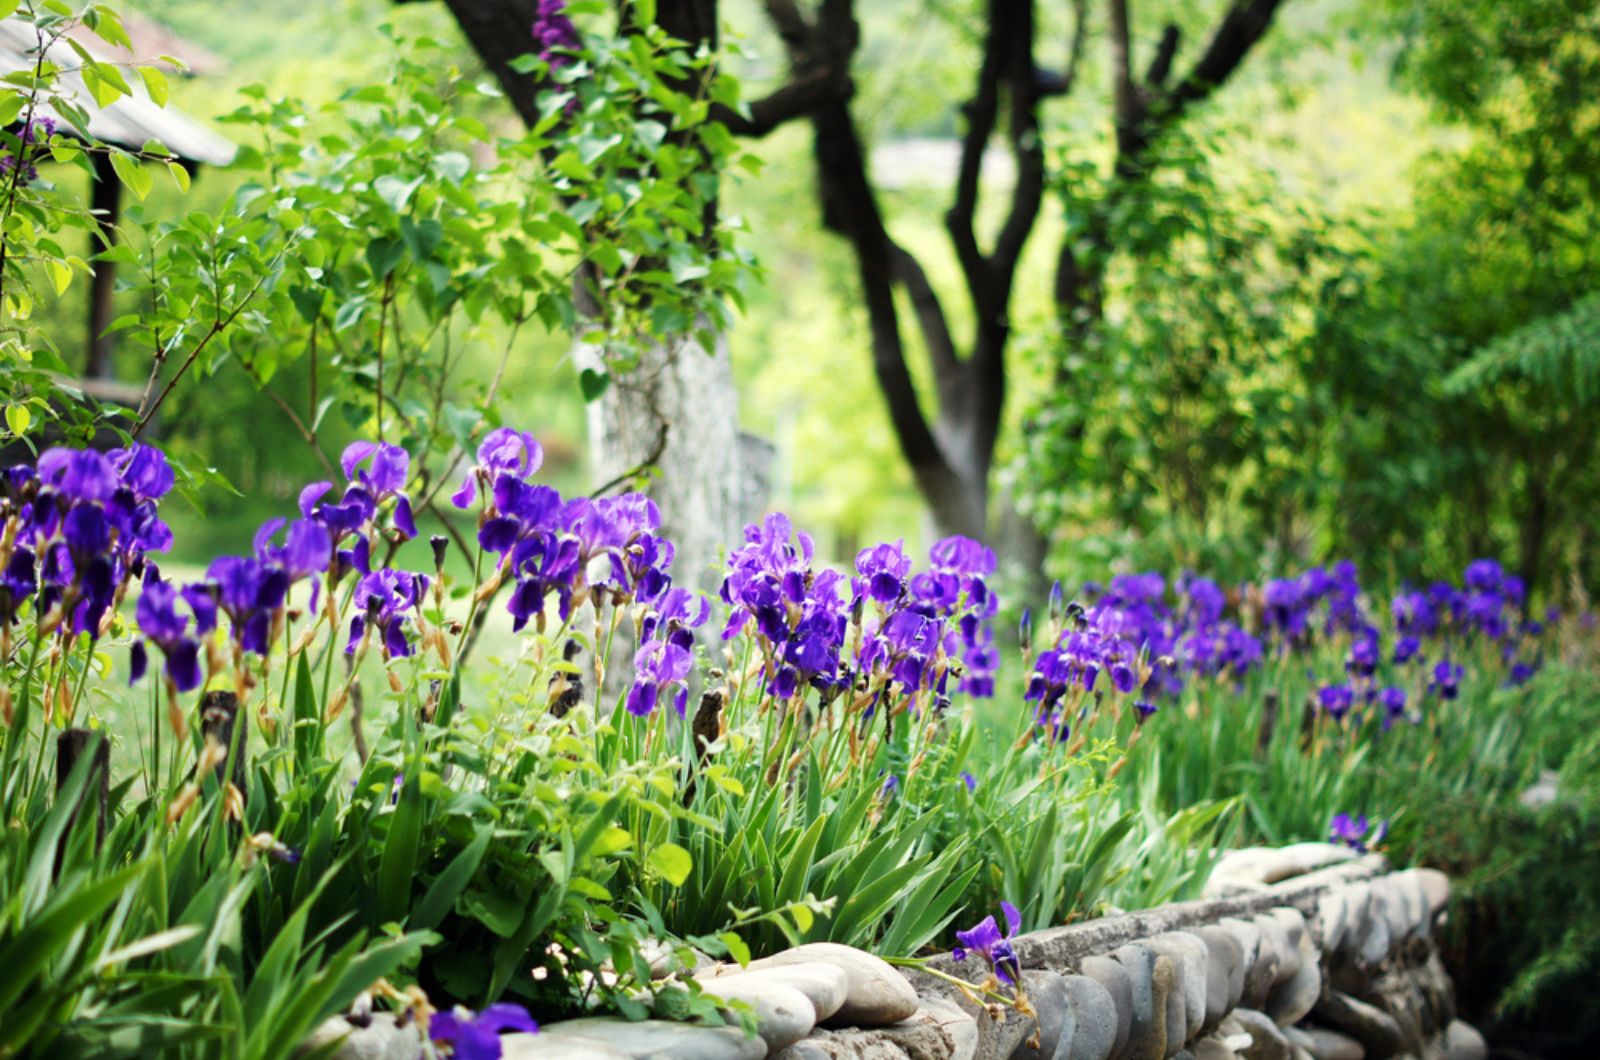 siberian iris flowers growing in nature